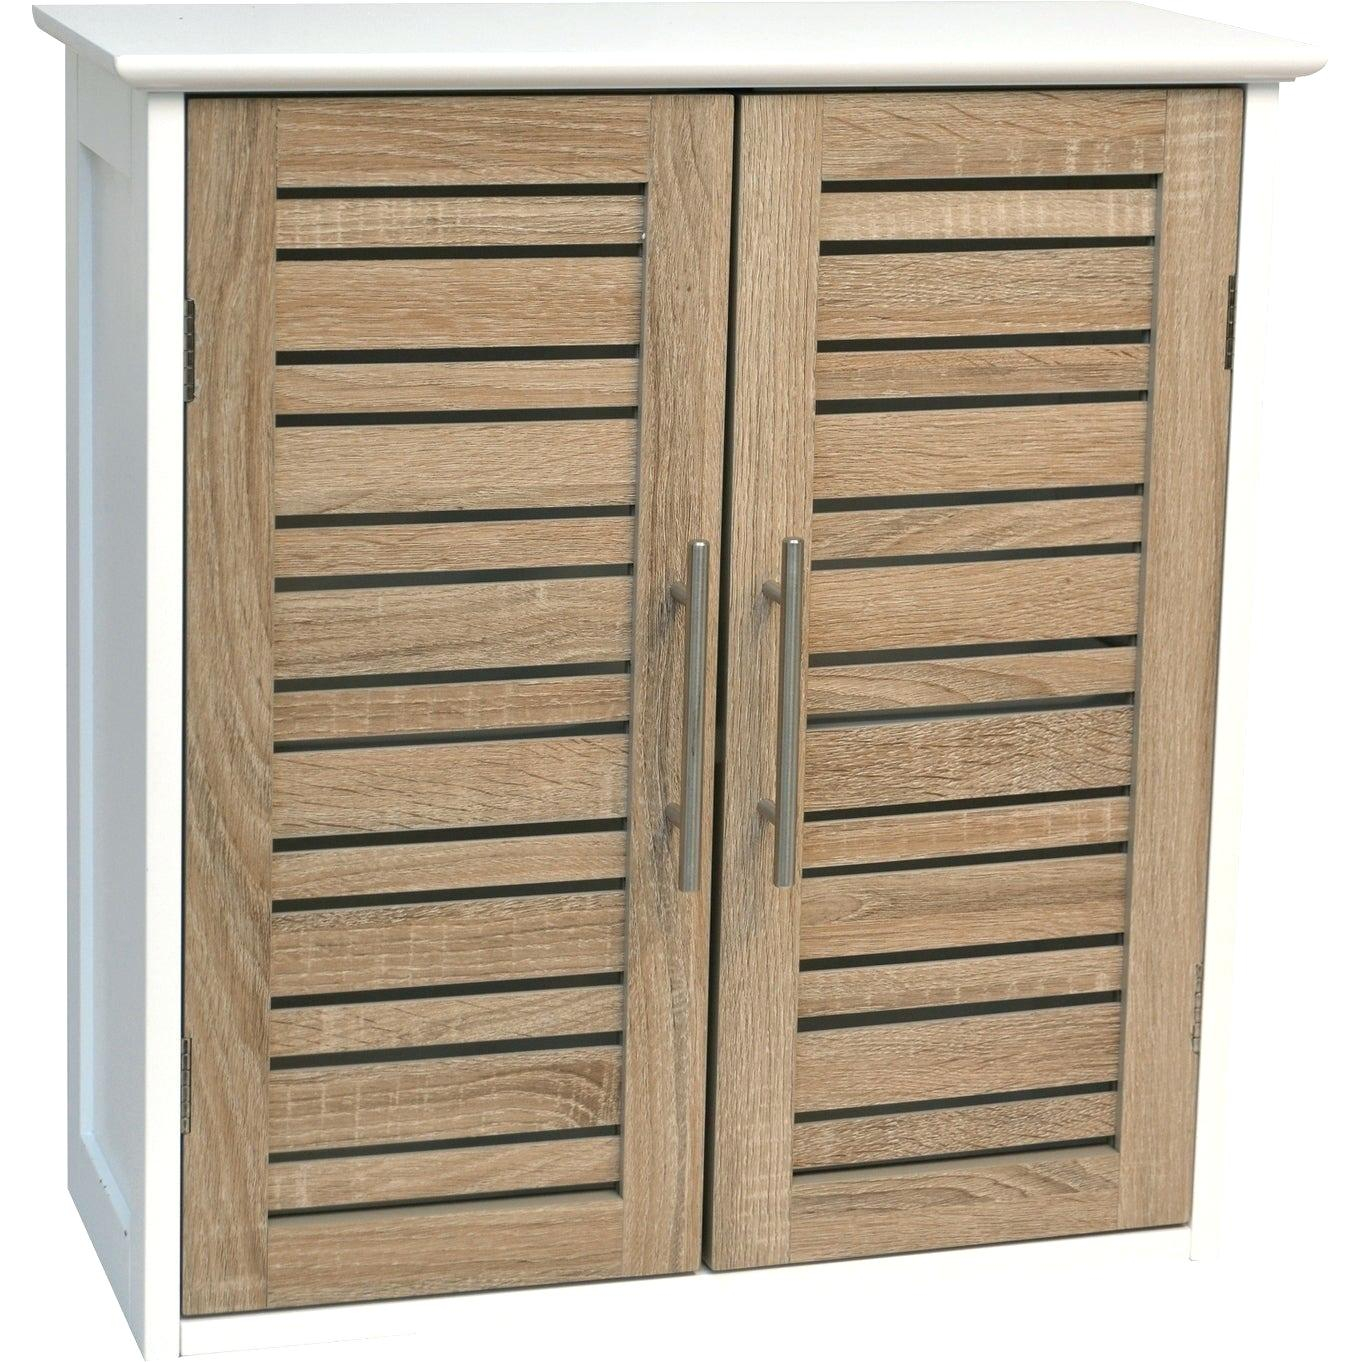 Oak Bathroom Storage Cabinet Shouter intended for measurements 1362 X 1362